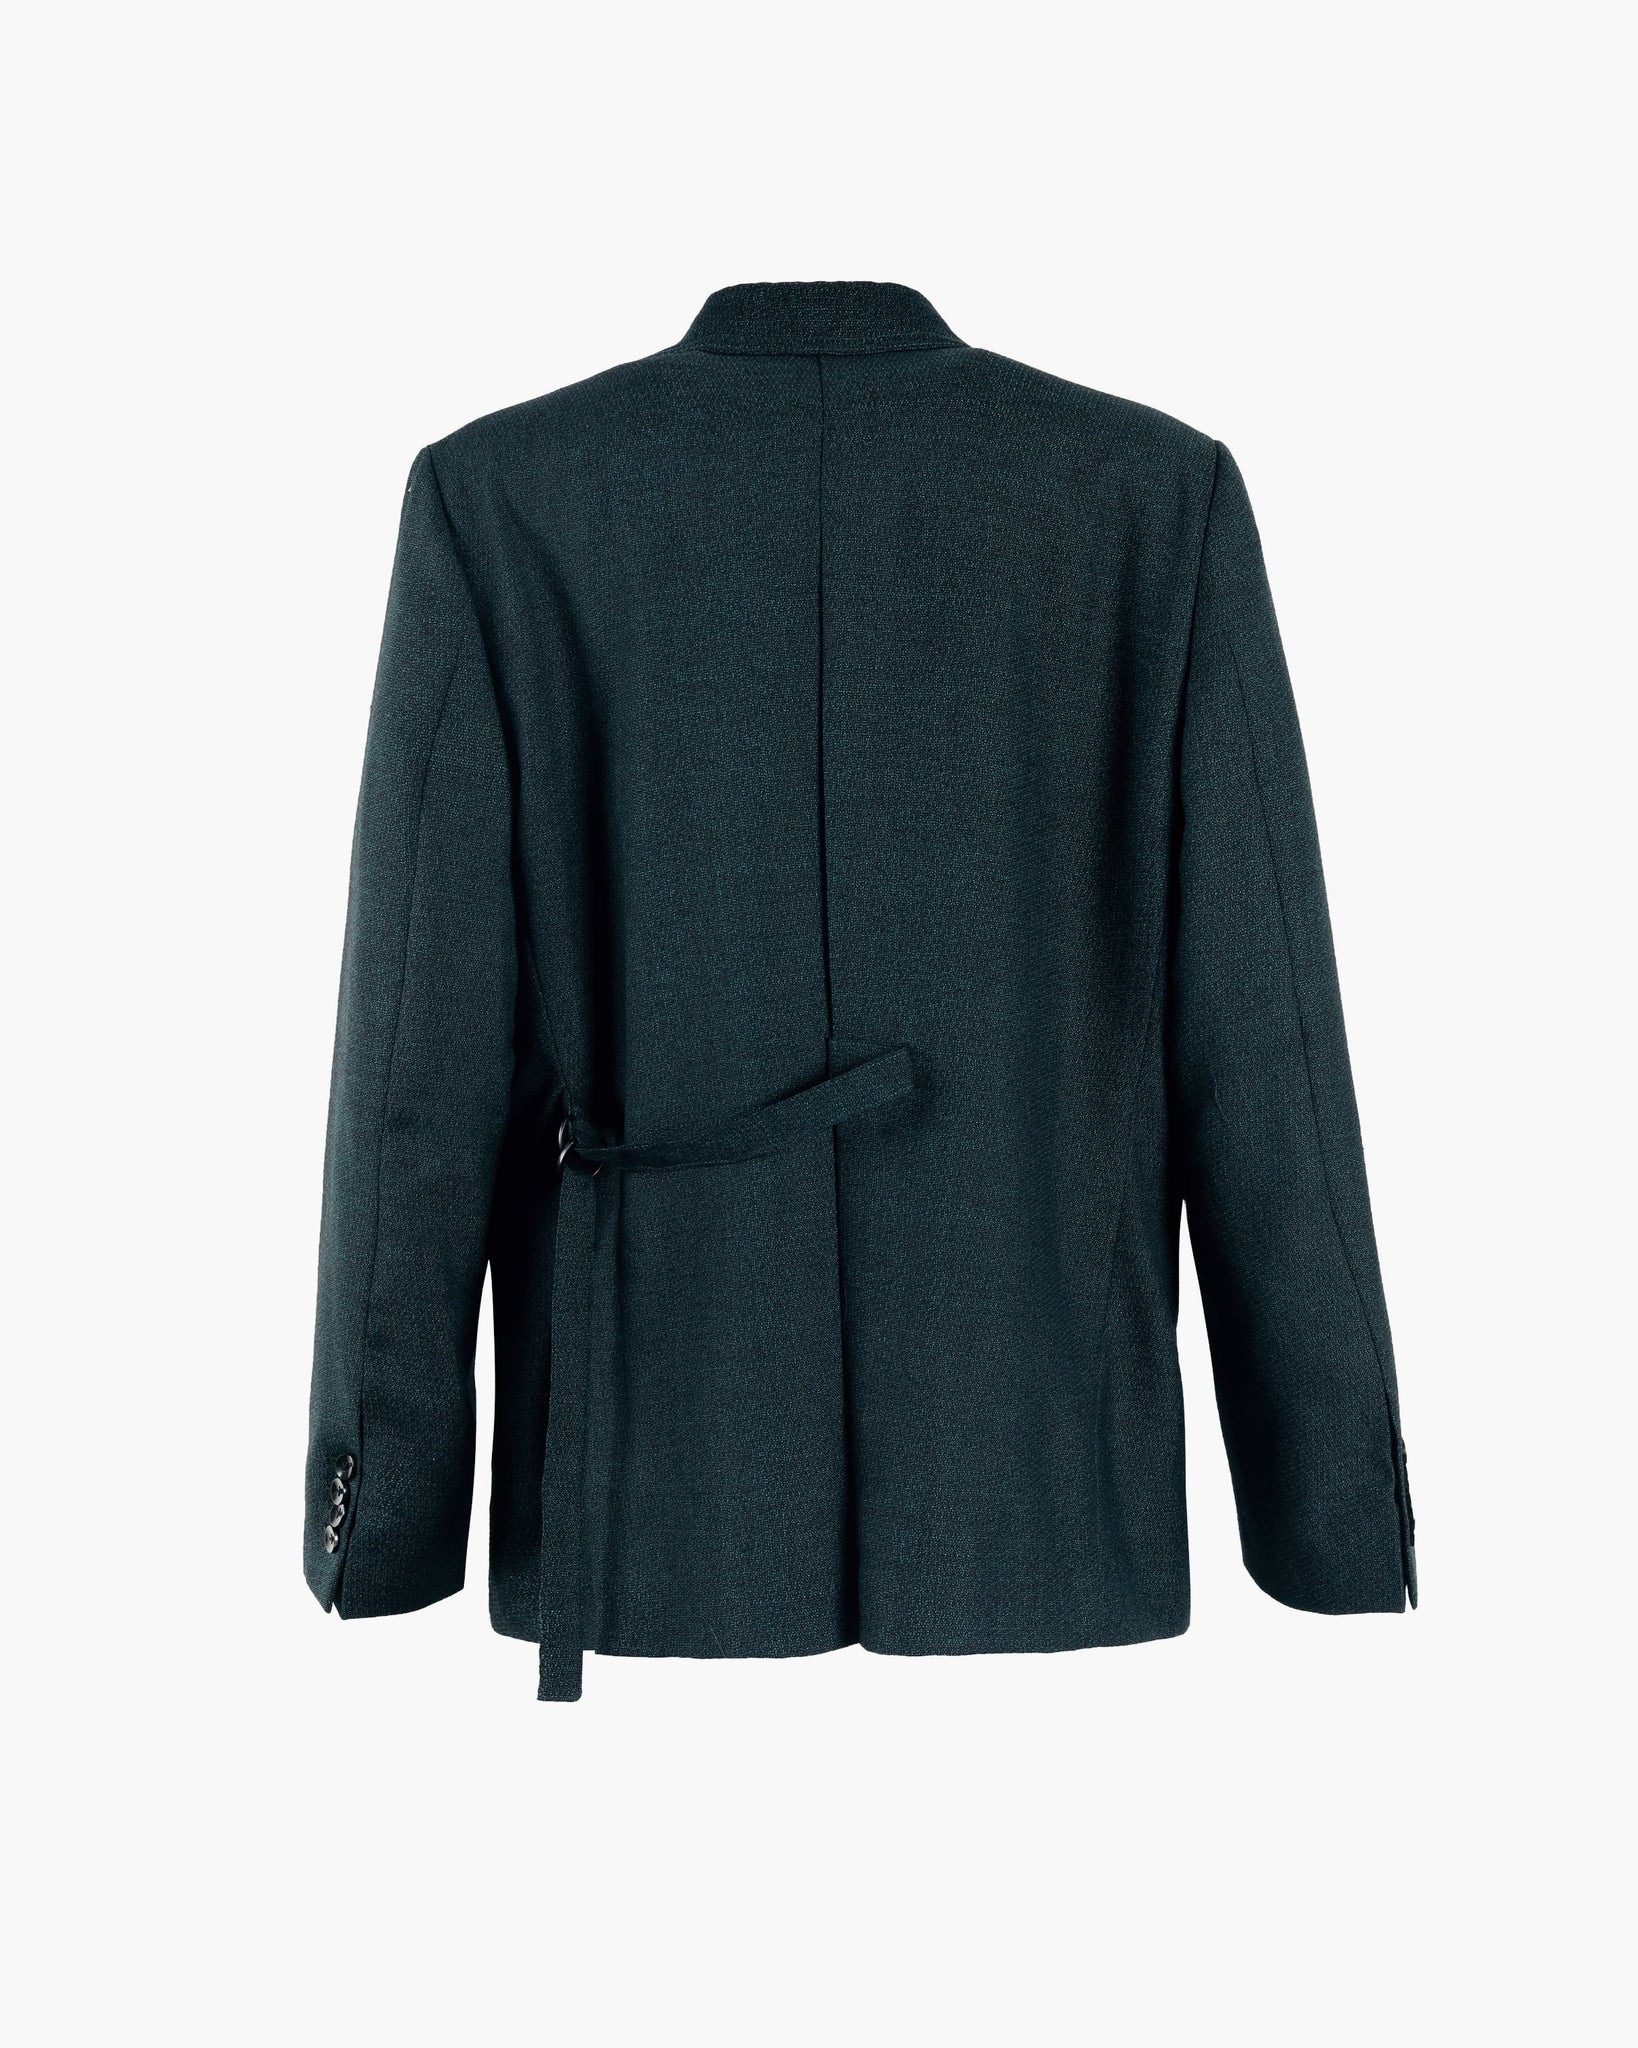 ROSEN Medici Suit Jacket in Wool